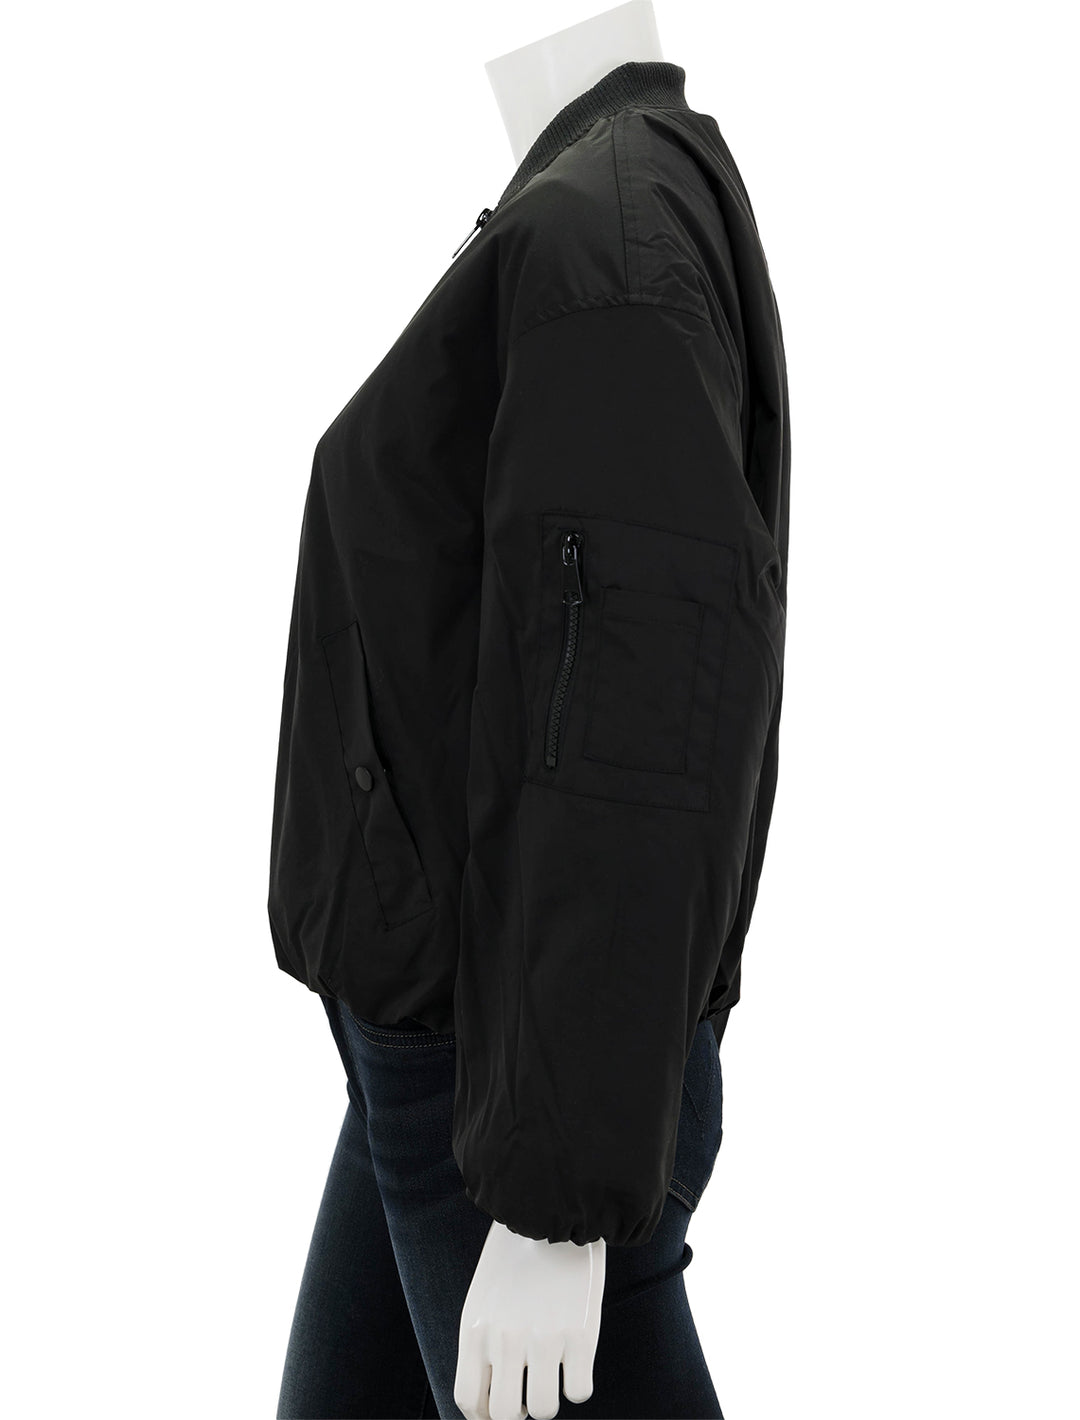 Side view of Steve Madden's vida jacket in black.